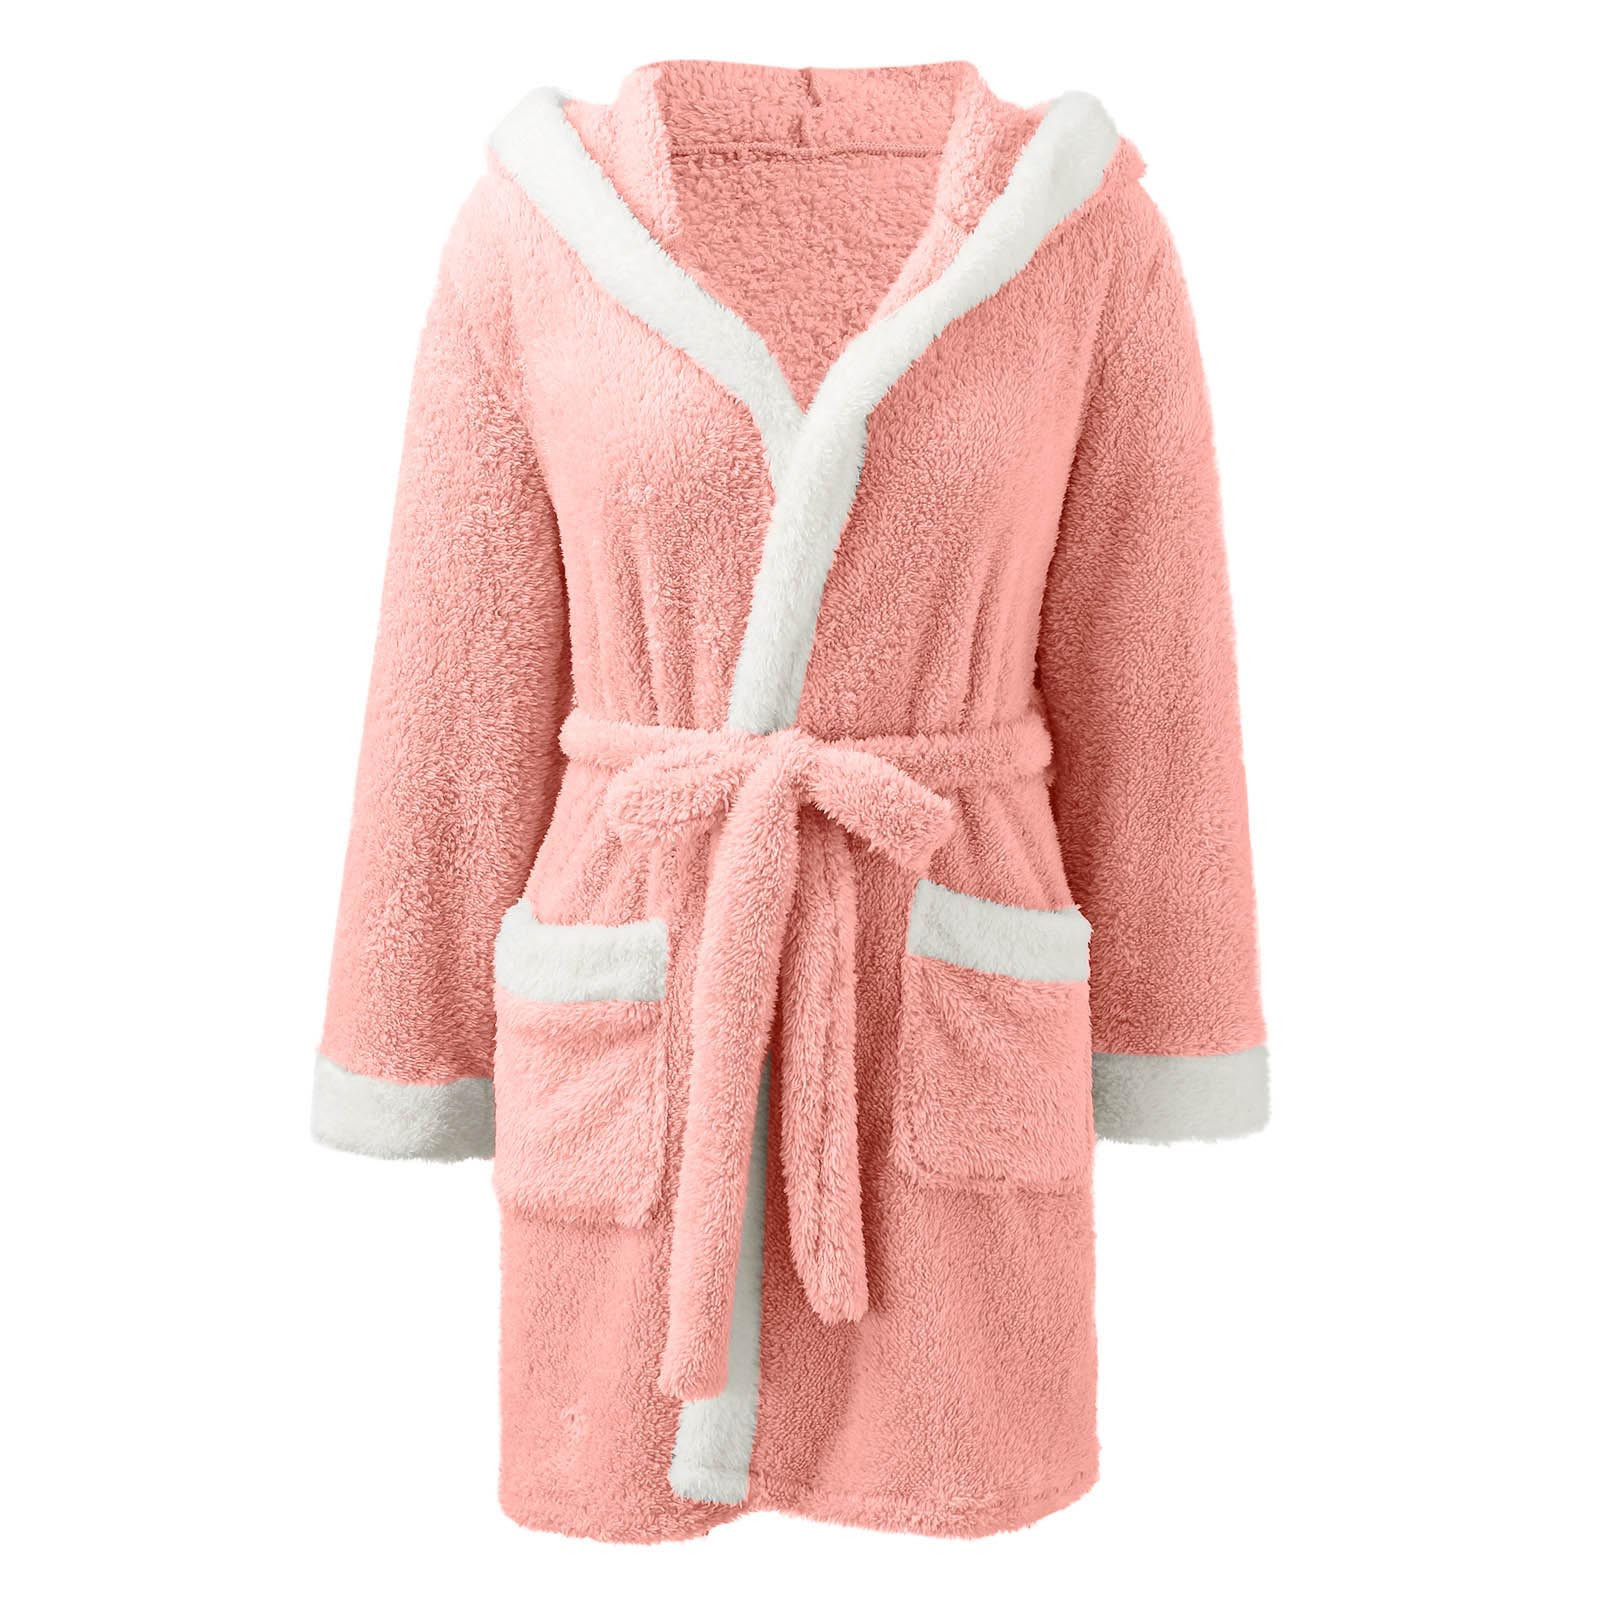 Women's Bathrobe Robe Cute Bunny Hooded Fleece Short Robes Warm Soft Plush  Terry Cloth Bathrobe Baggy Spa Housecoats : Sports & Outdoors 